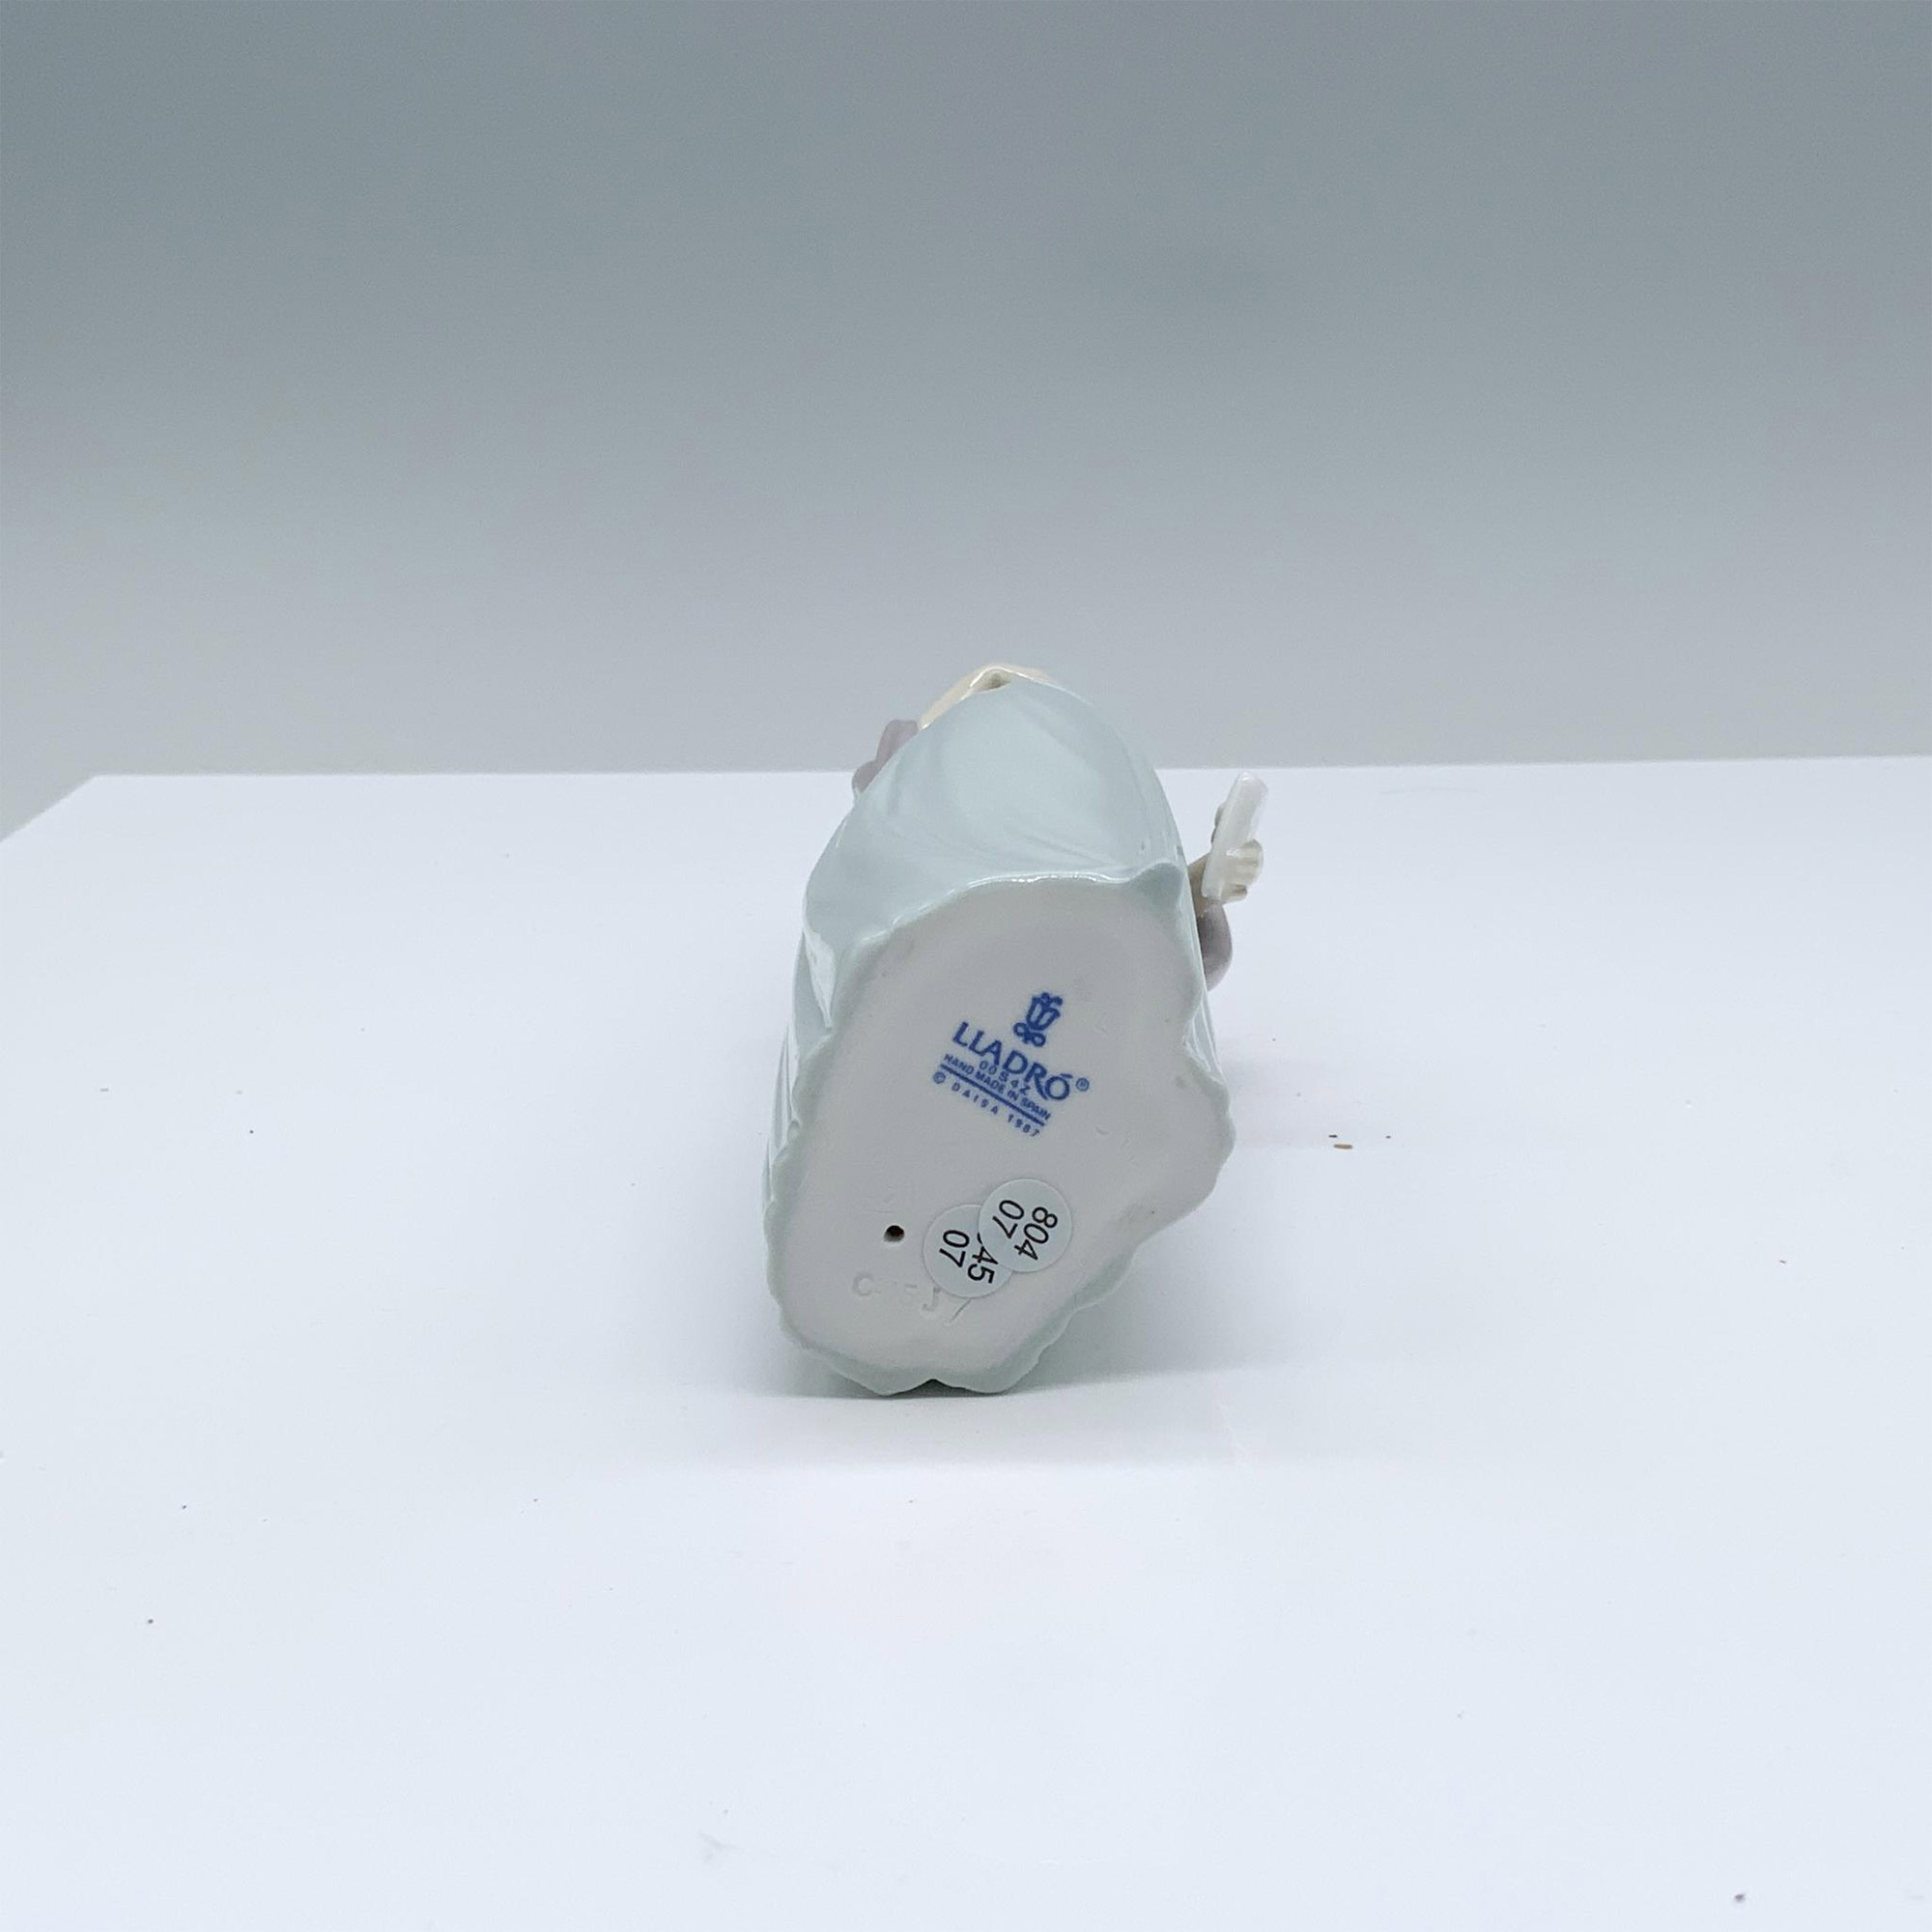 Ingenue 1005487 - Lladro Porcelain Figurine - Image 3 of 4